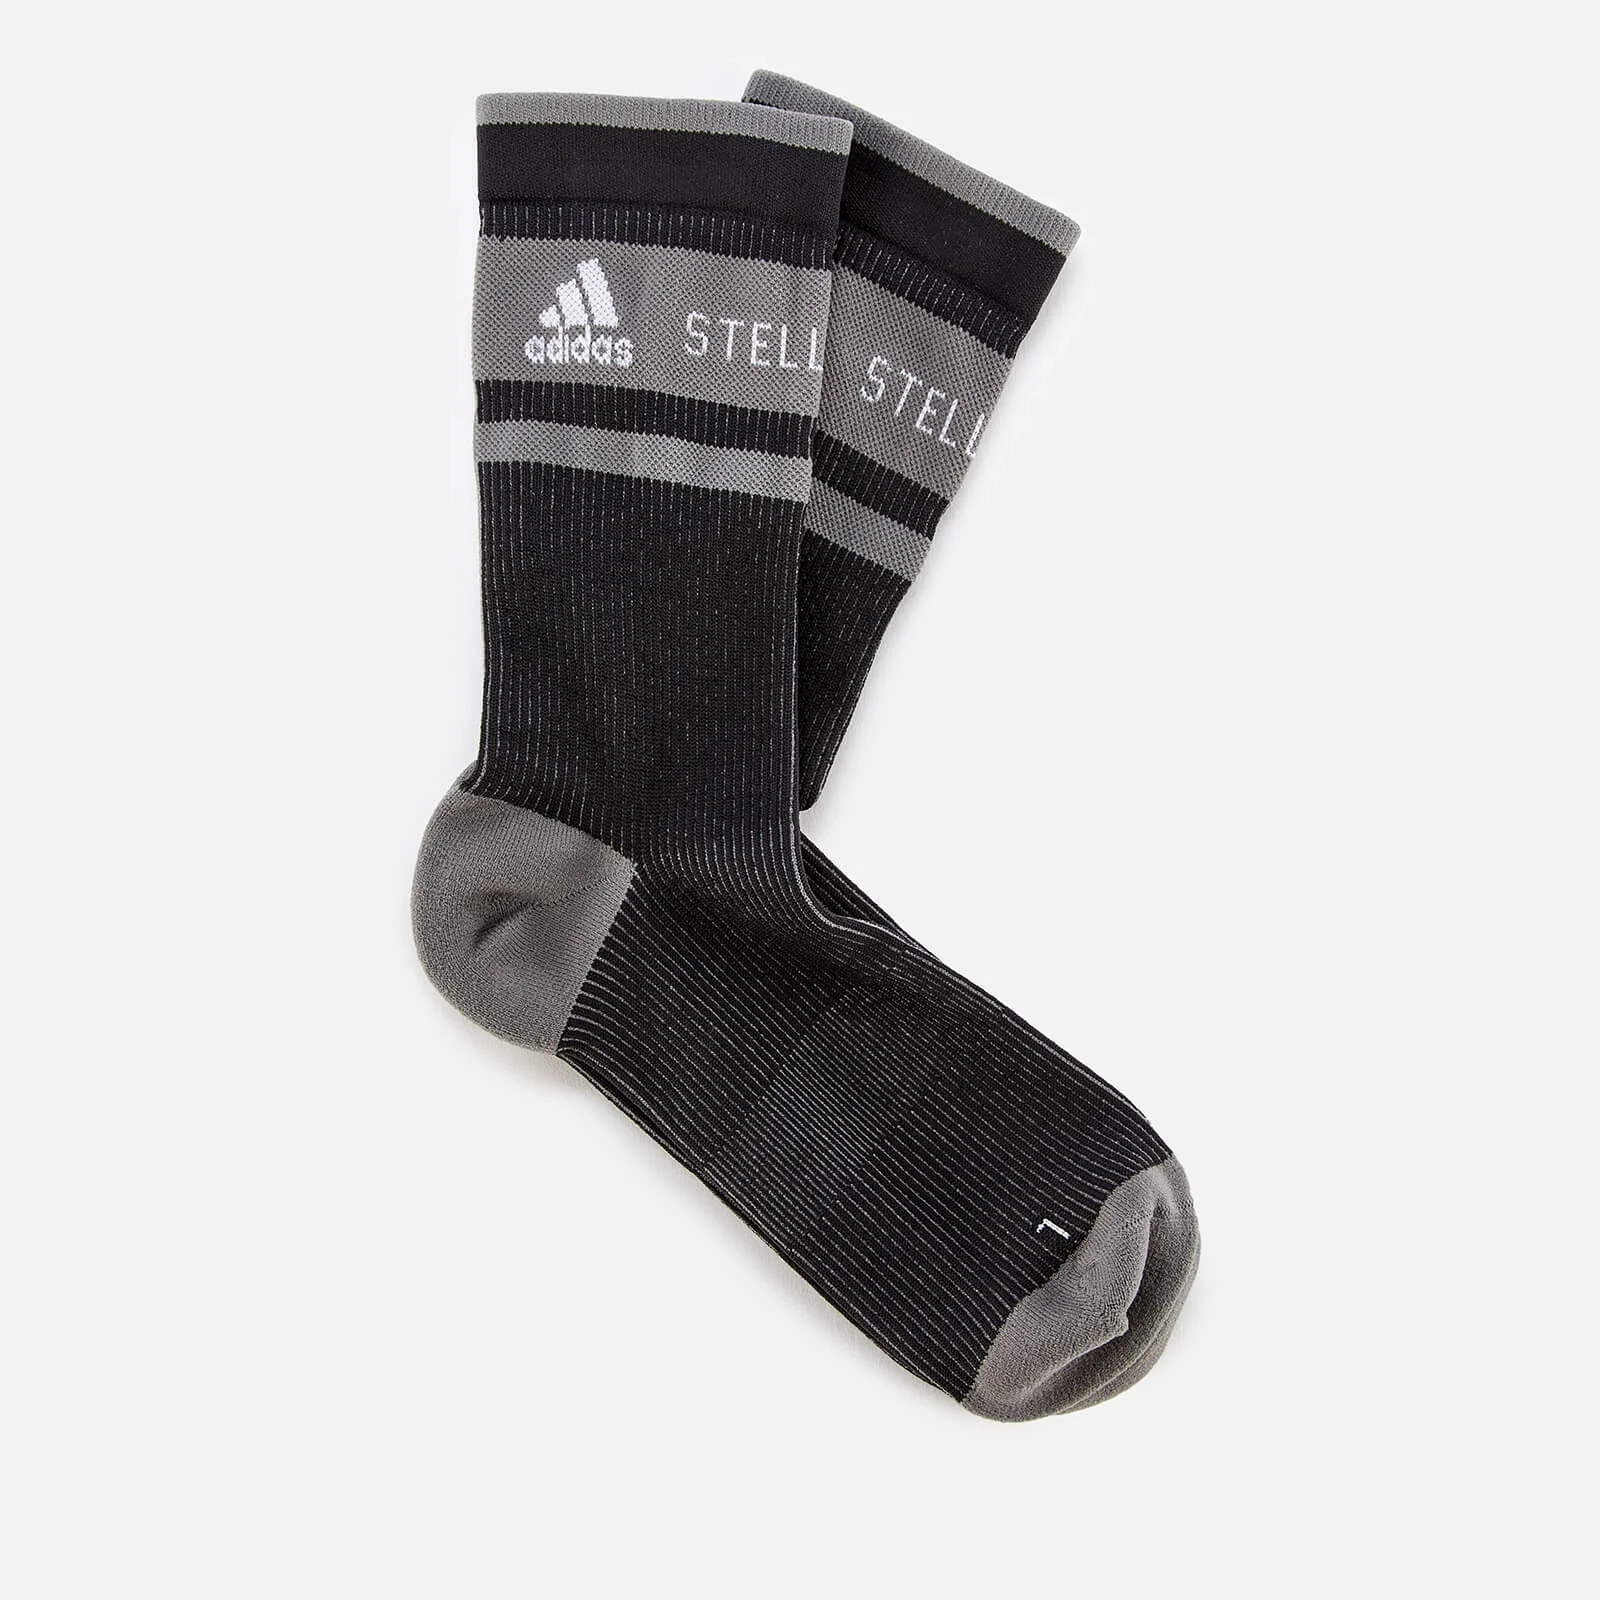 adidas by Stella McCartney Women's Crew Socks - Black/Ash/White Image 1